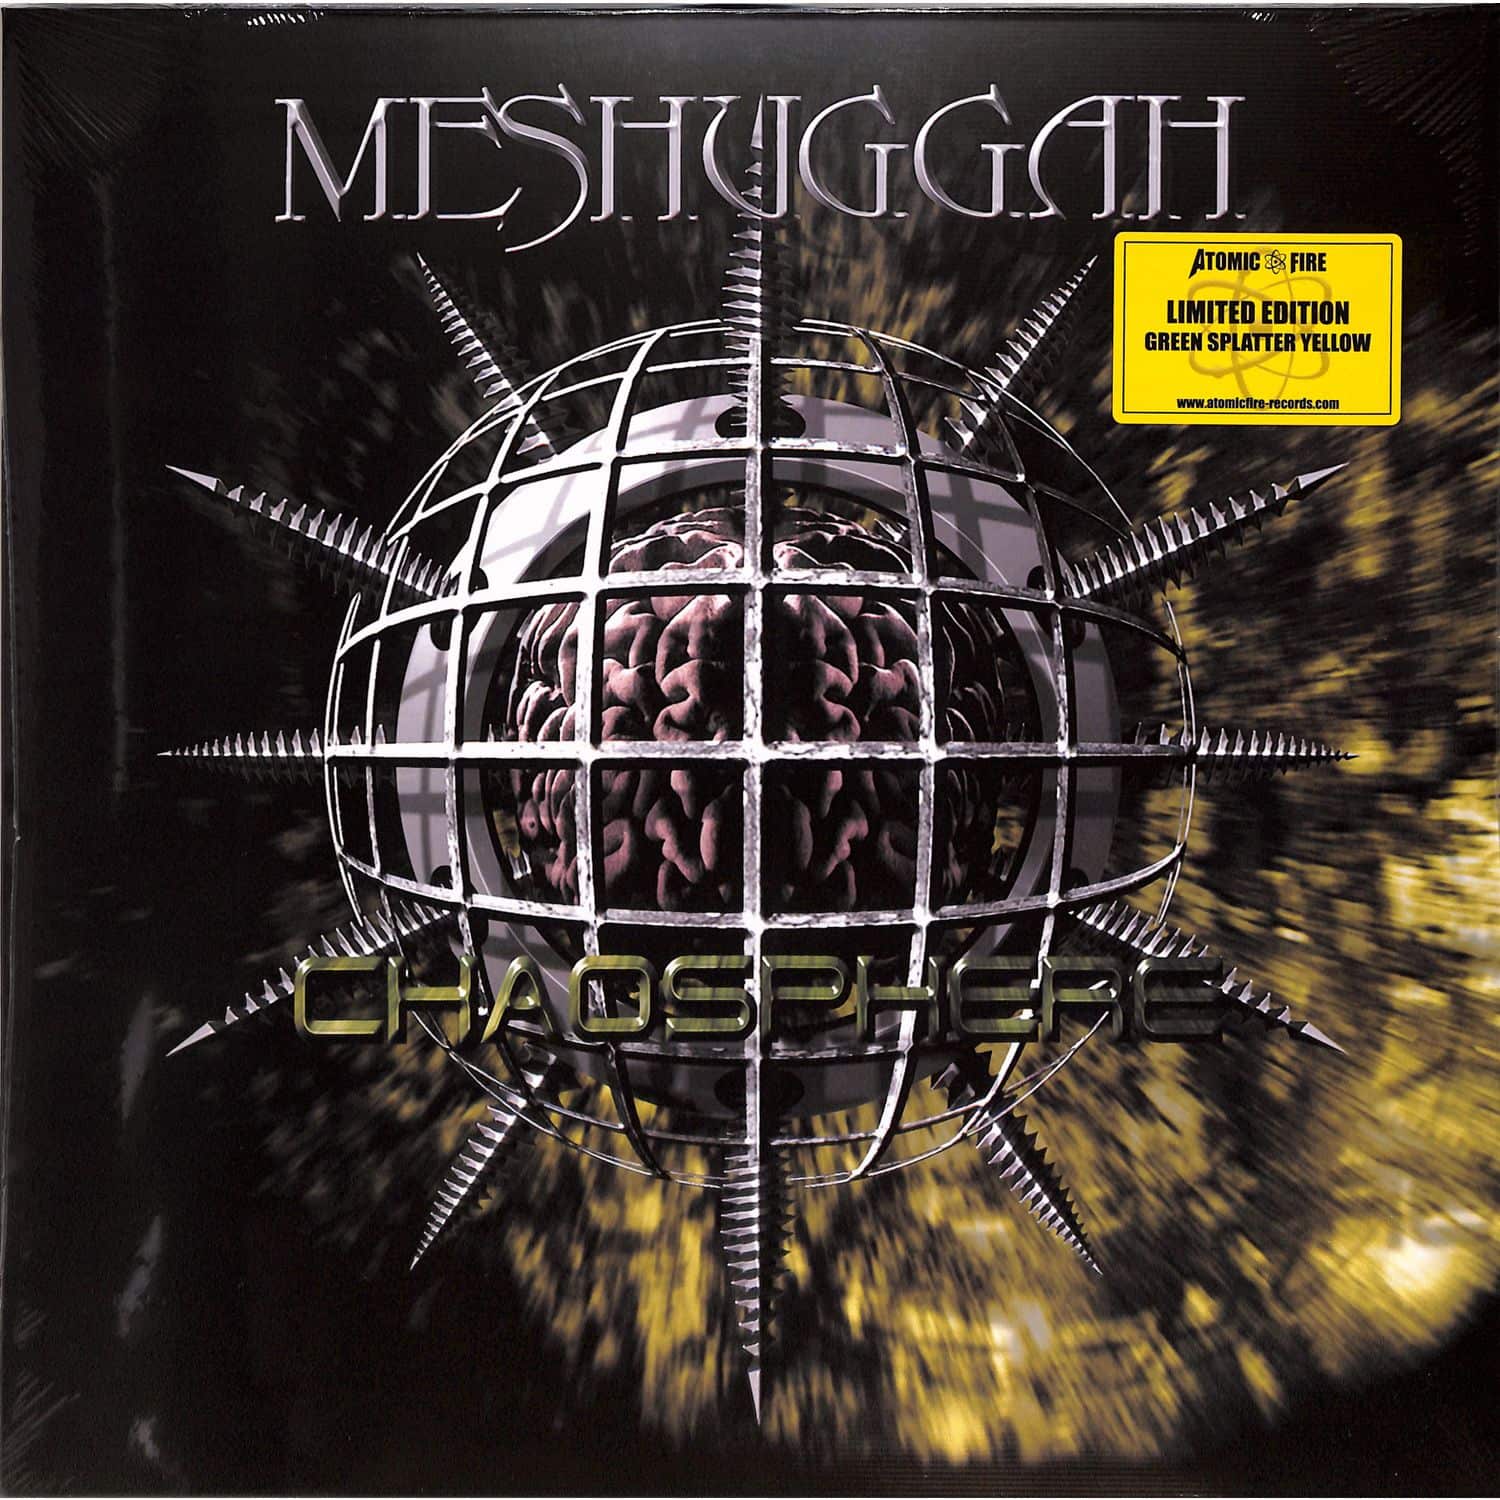 Meshuggah - CHAOSPHERE 